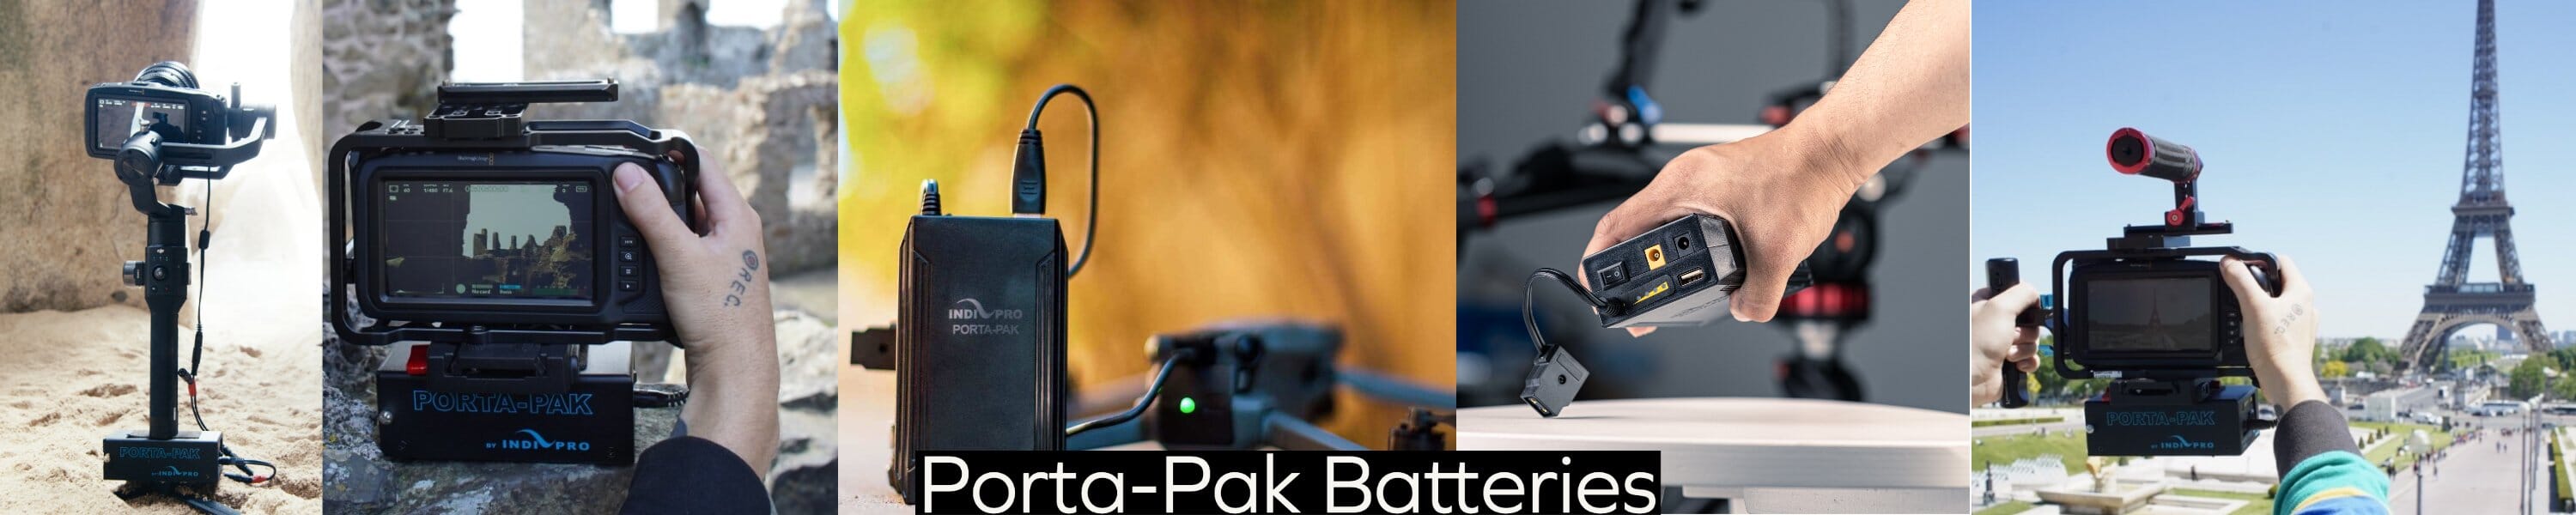 Porta-Pak Batteries & Accessories